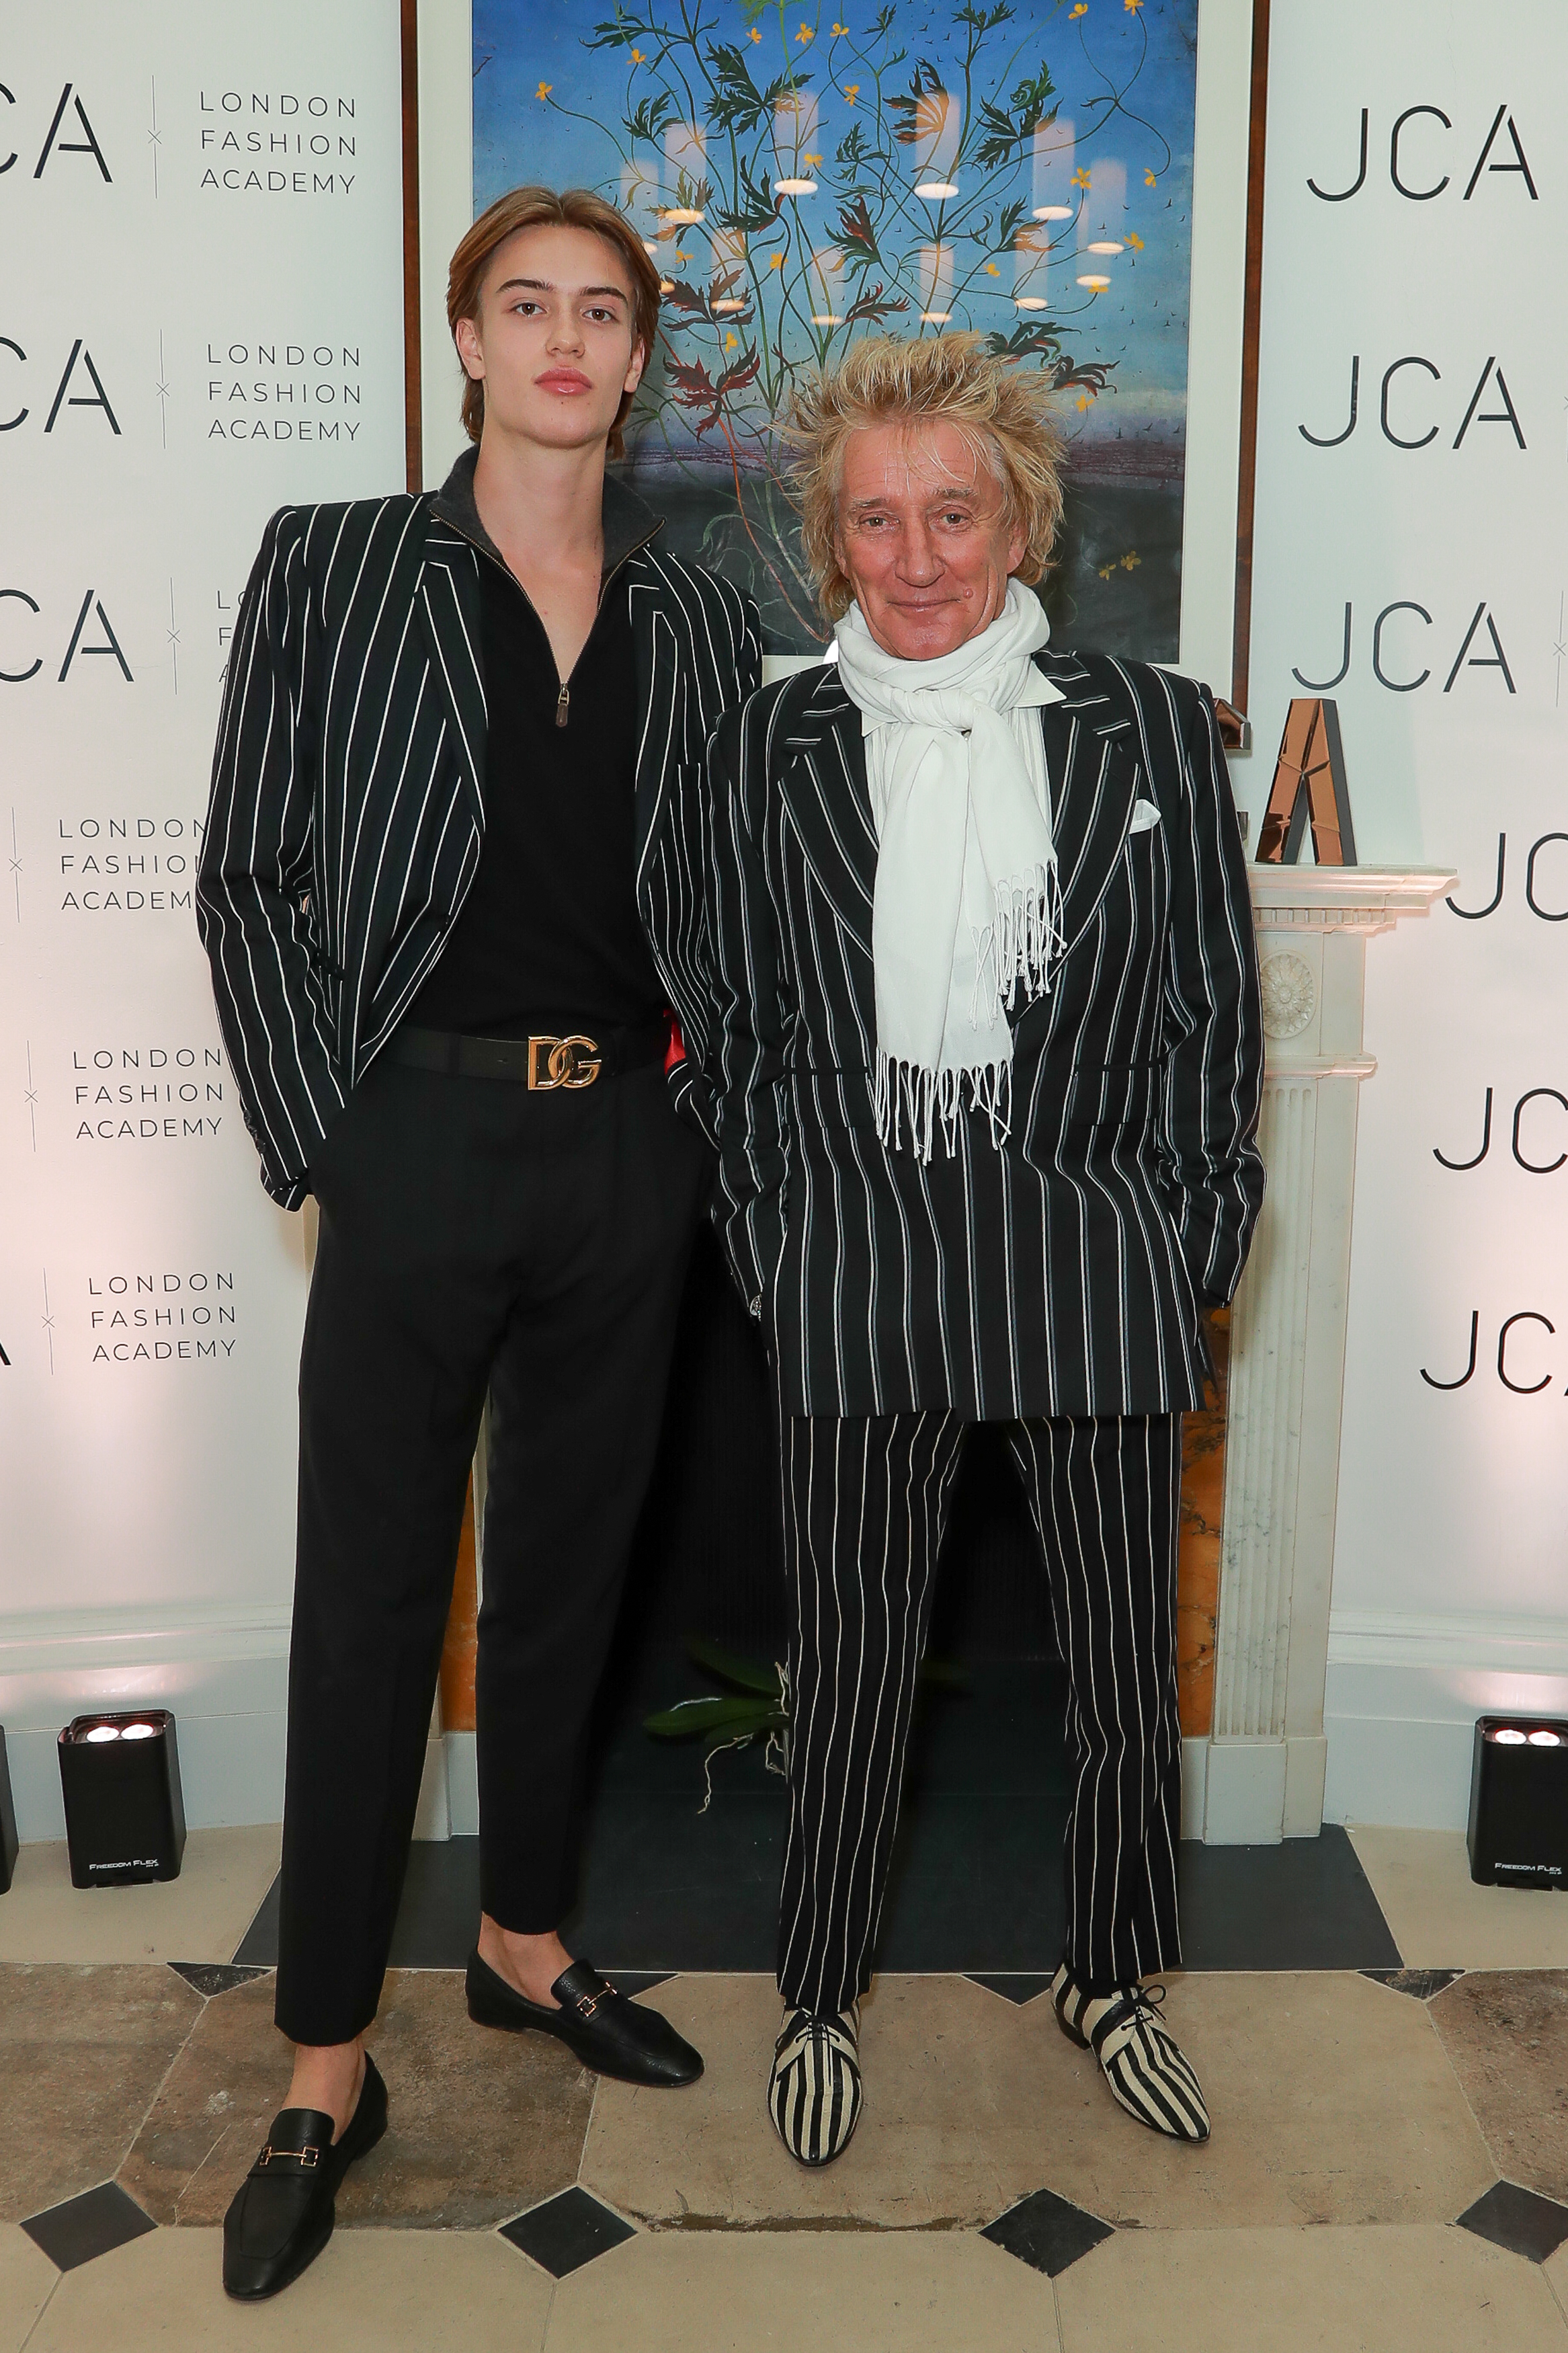 JCA London Fashion Academy MA collections, Jimmy Choo - Rod Stewart and Son